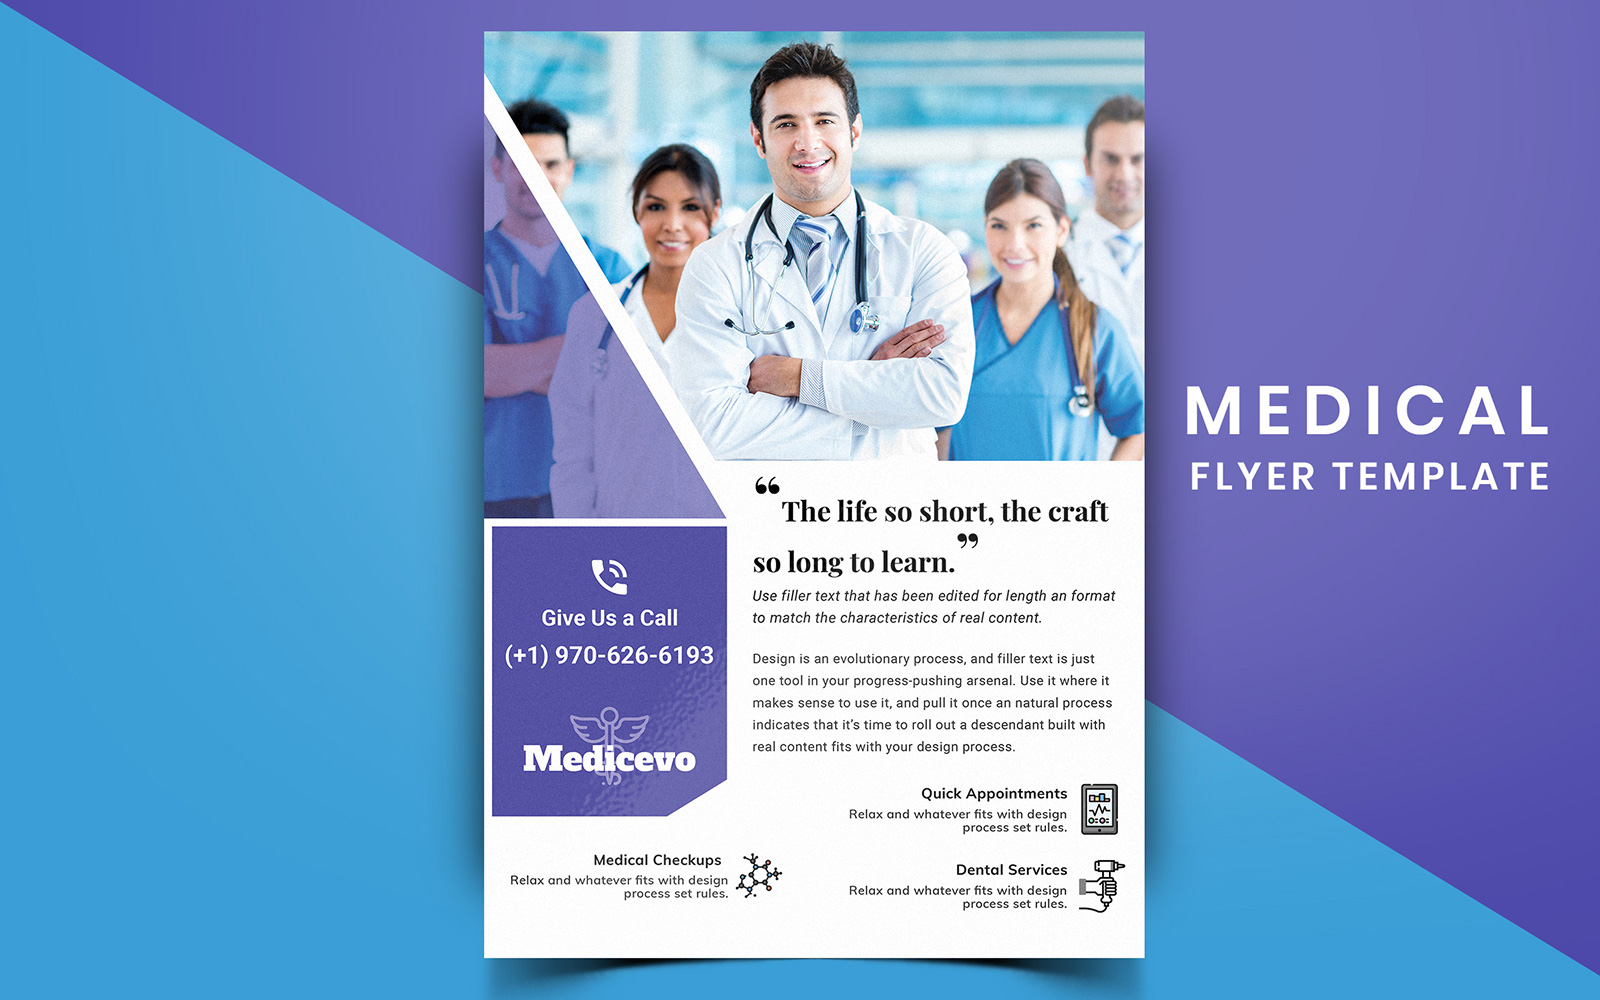 Hermi - Medical Flyer Design - Corporate Identity Template